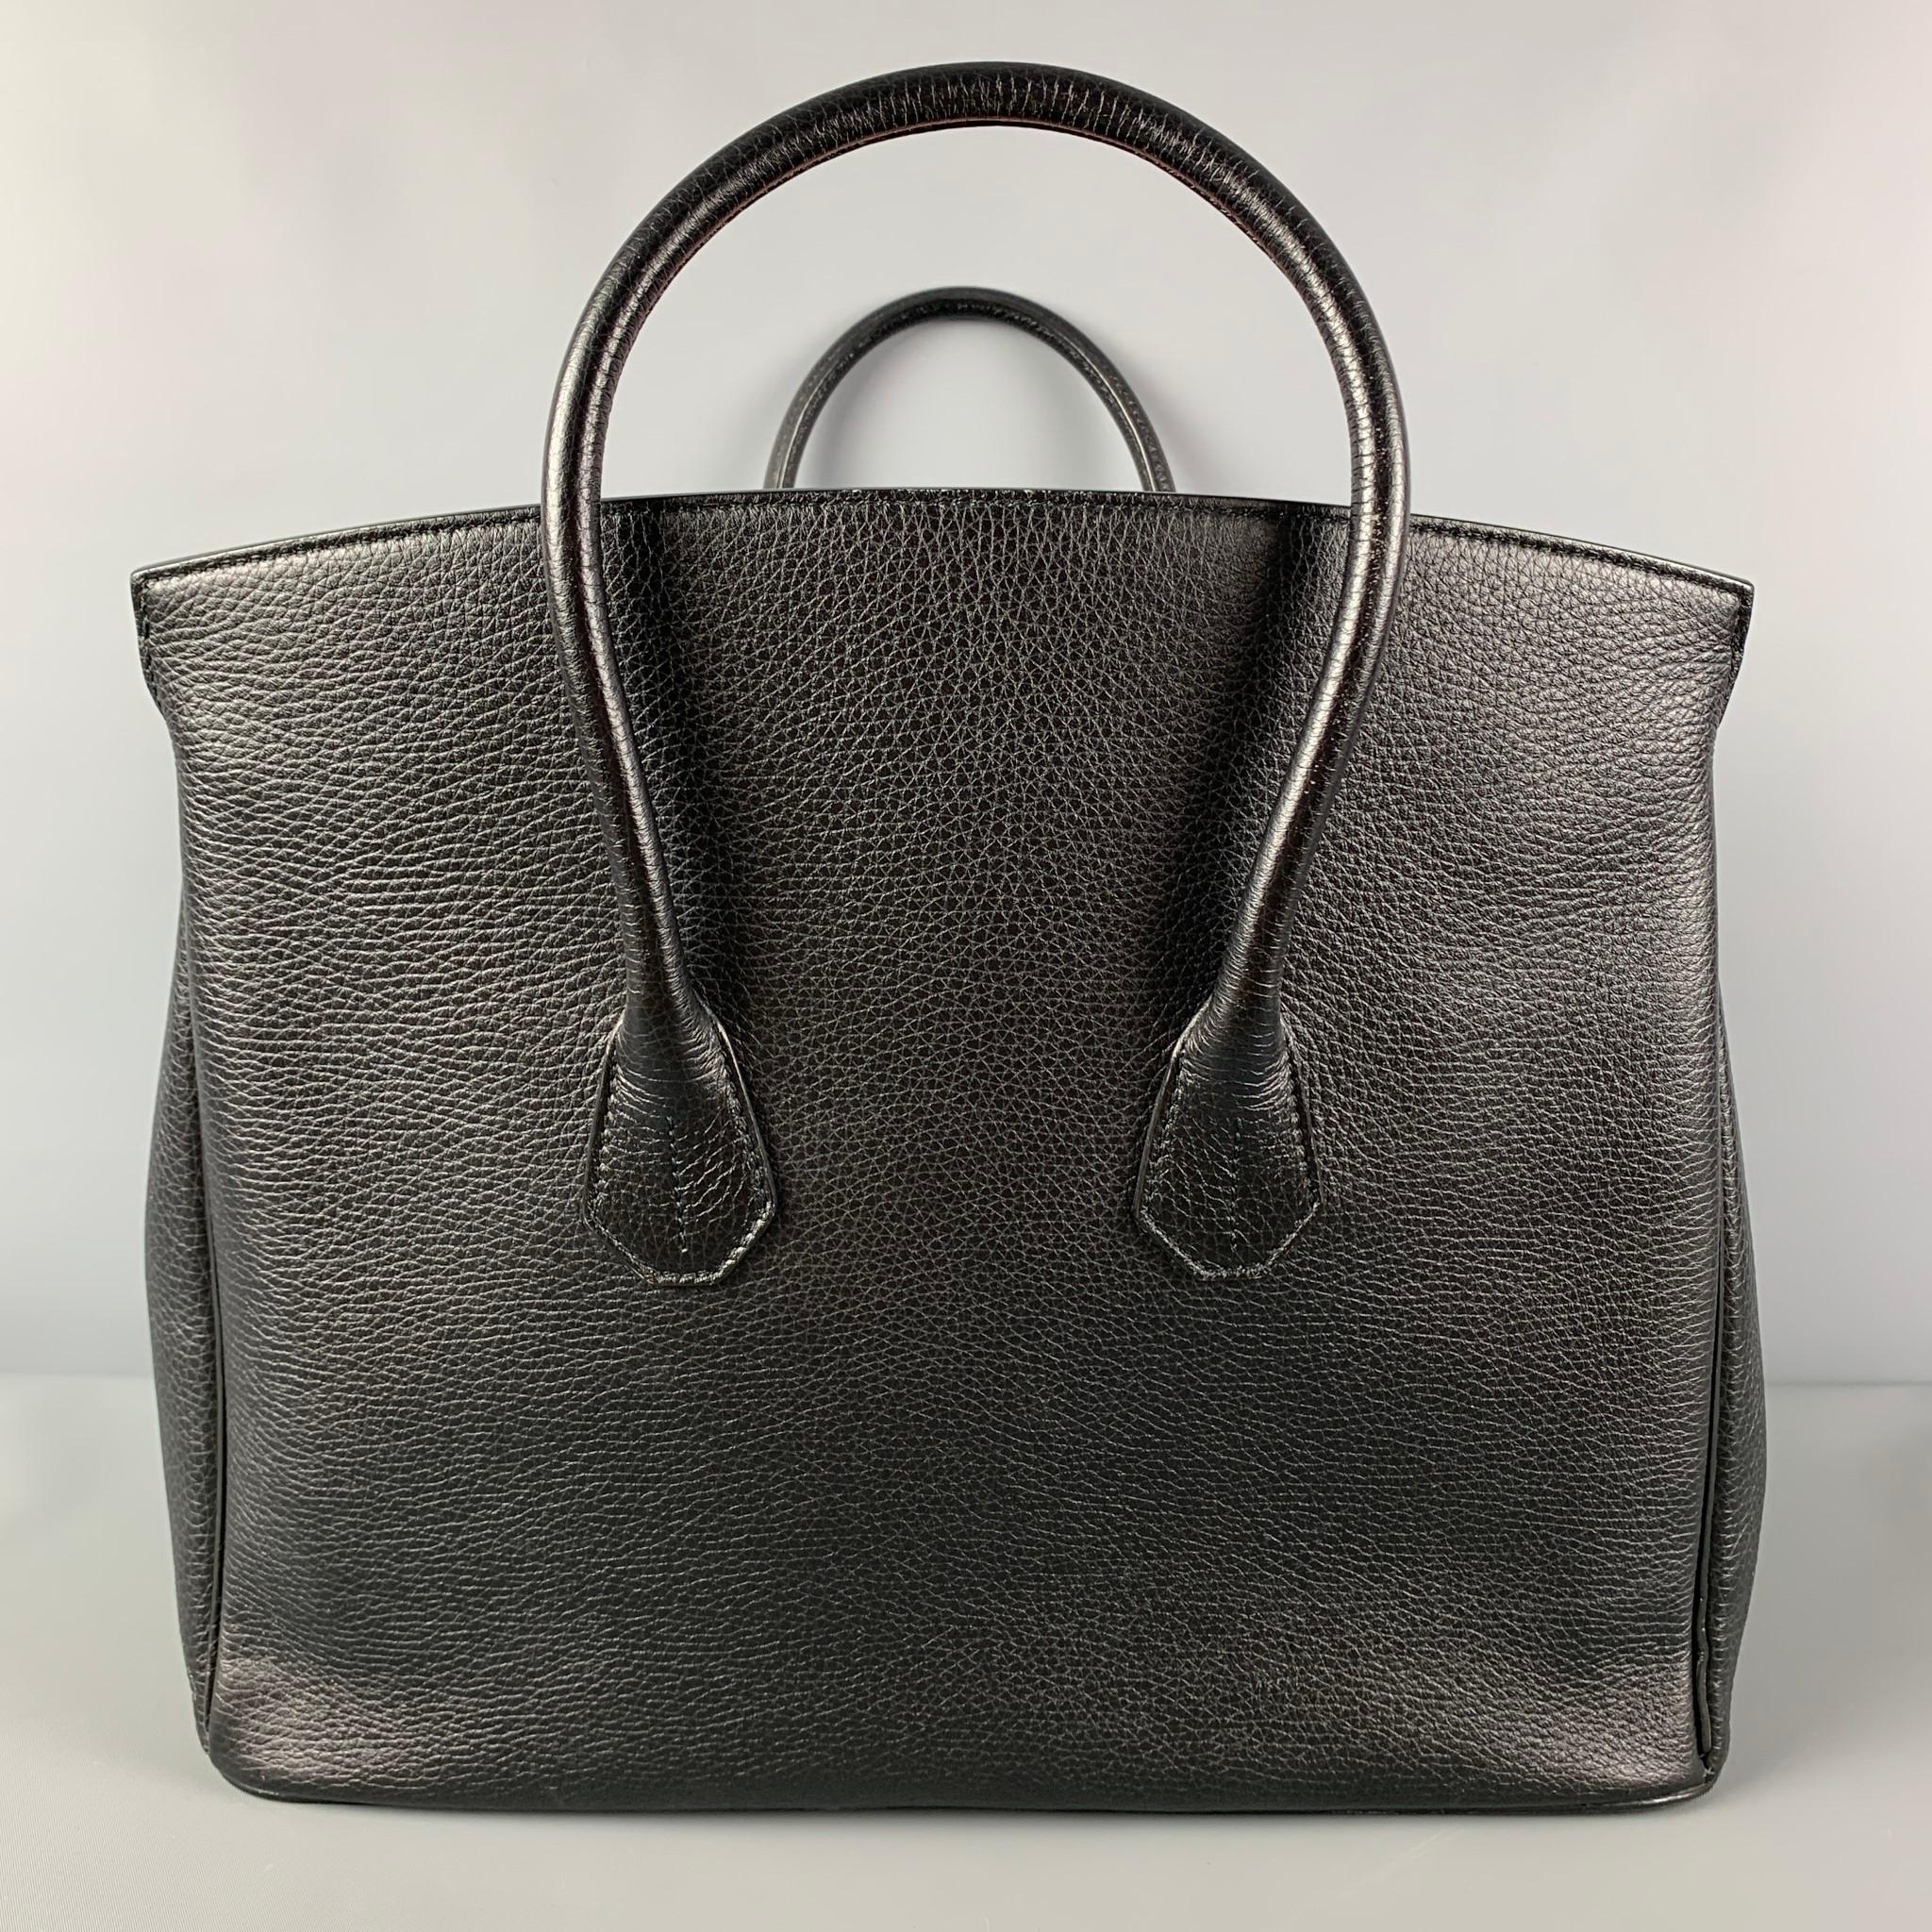 Women's BALLY Black Pebble Grain Leather Top Handles Handbag